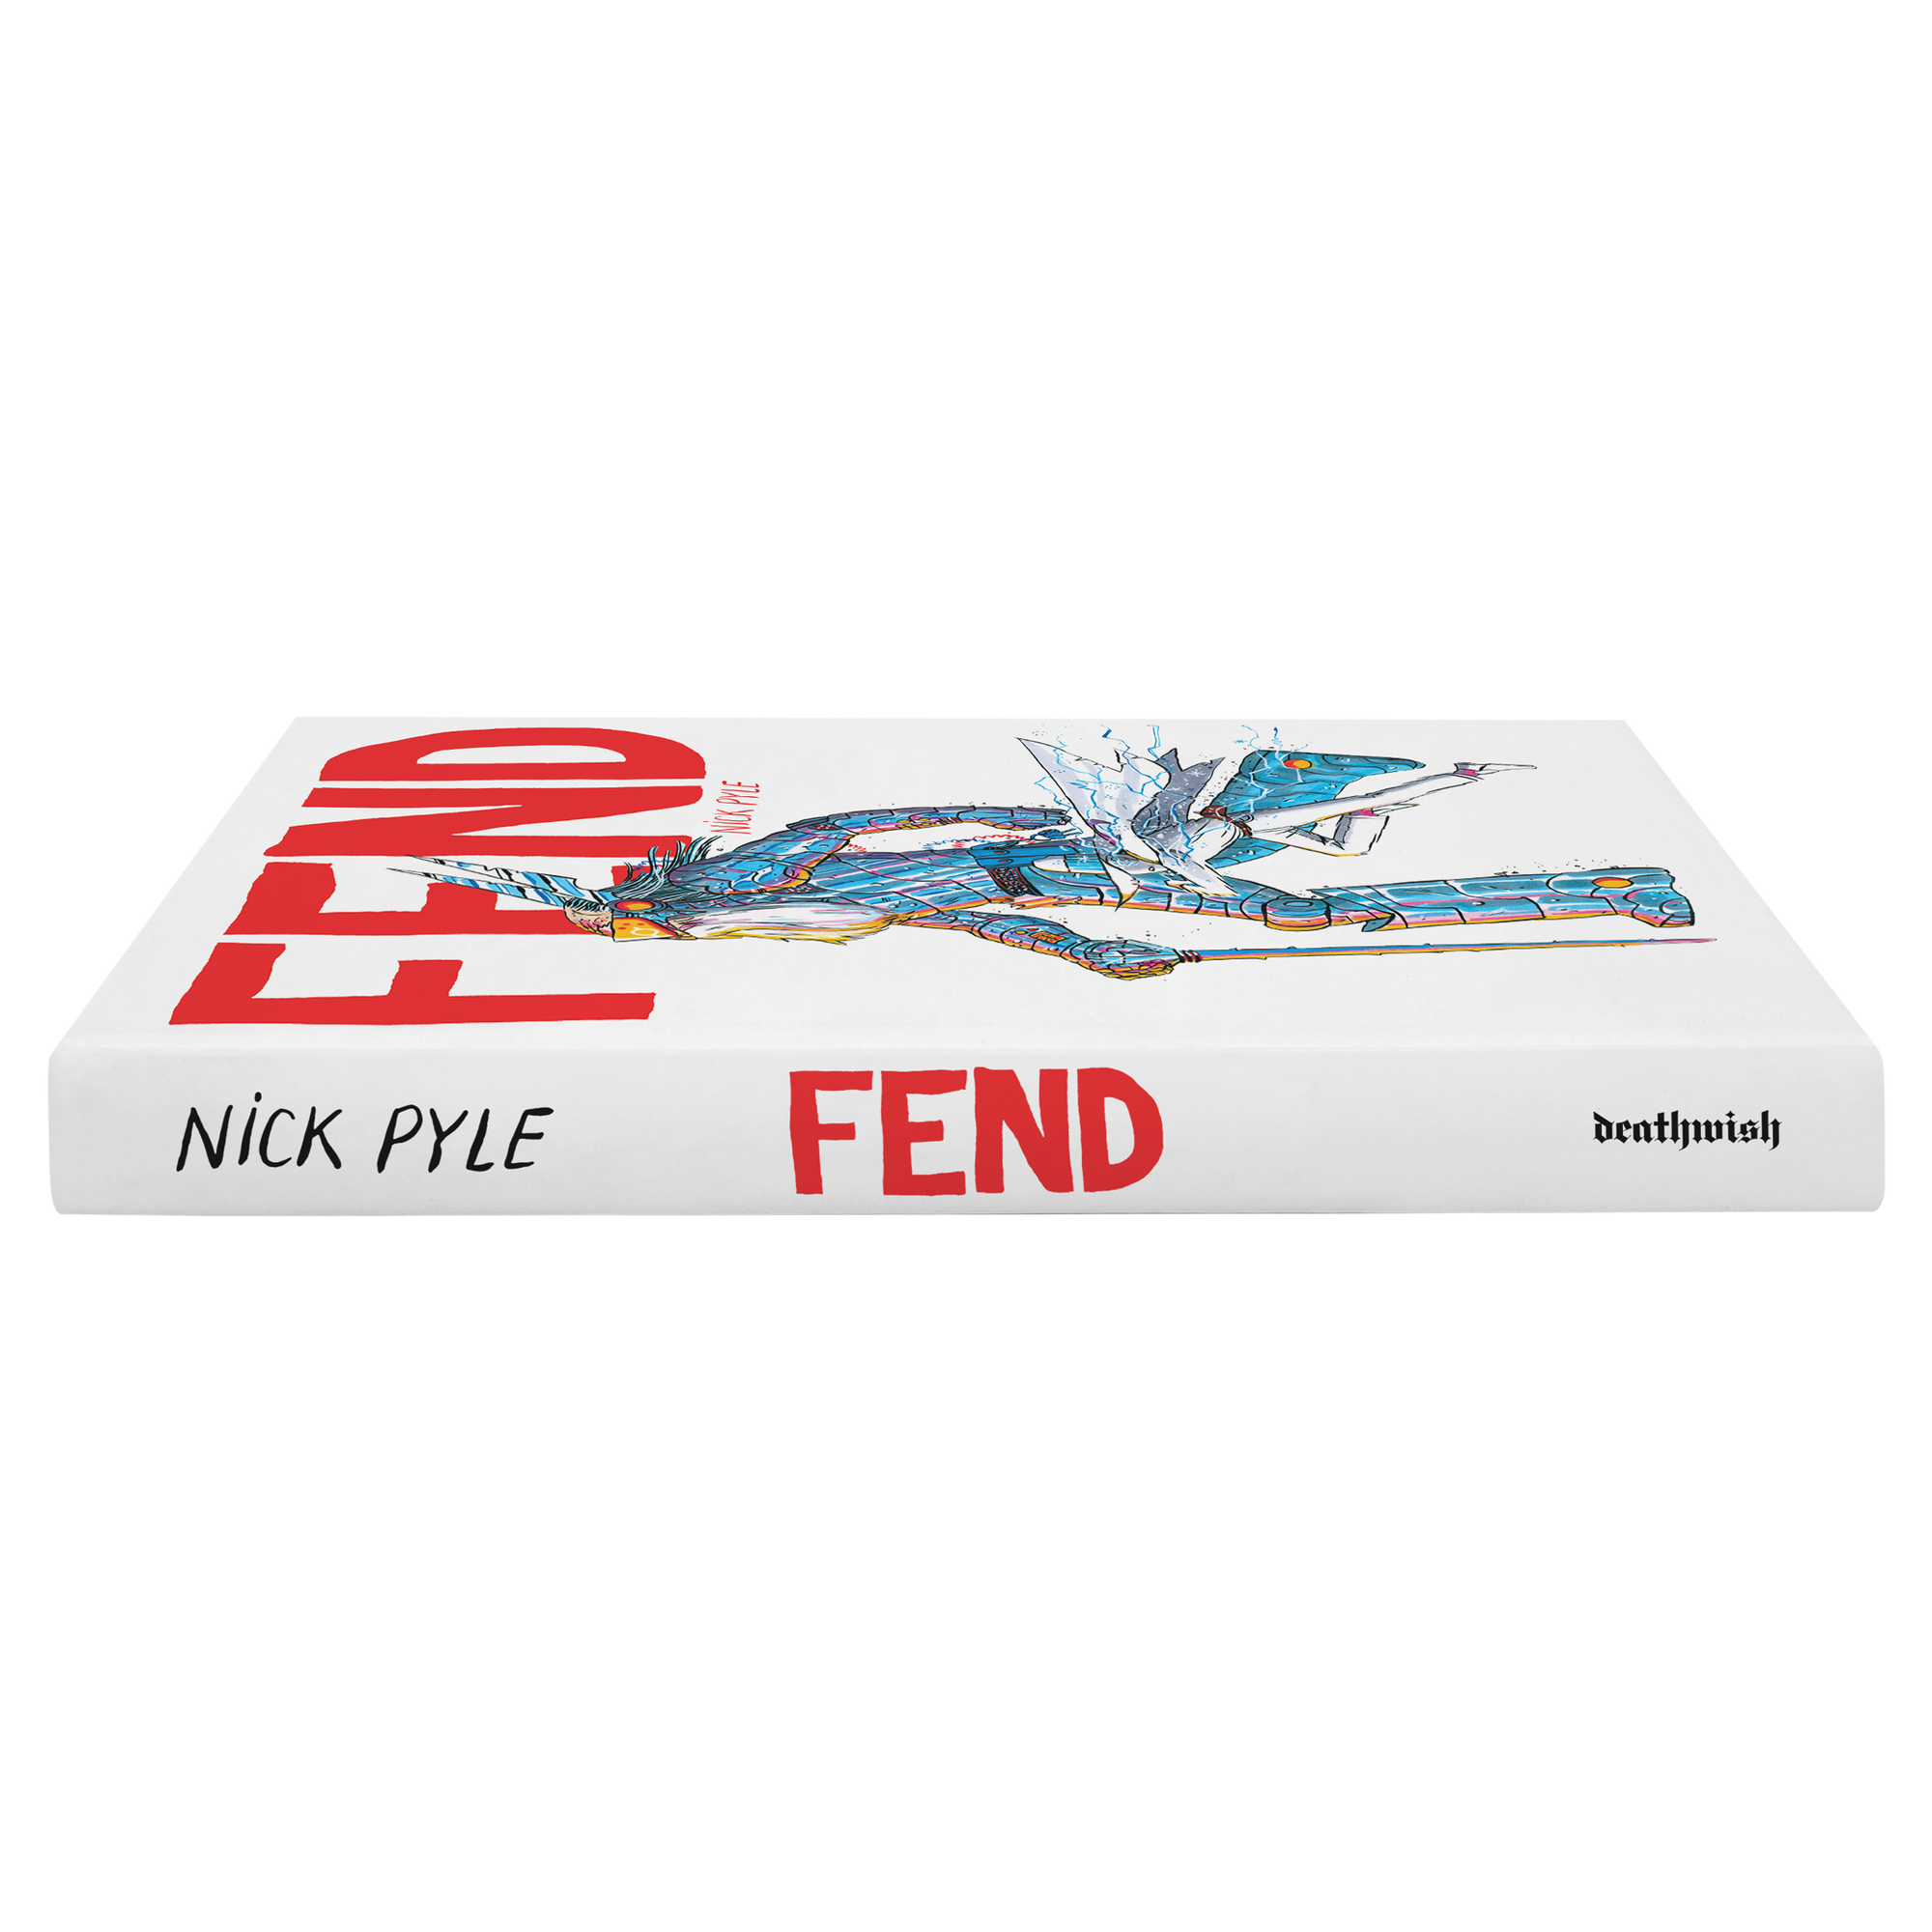 NICK PYLE "Fend" Book